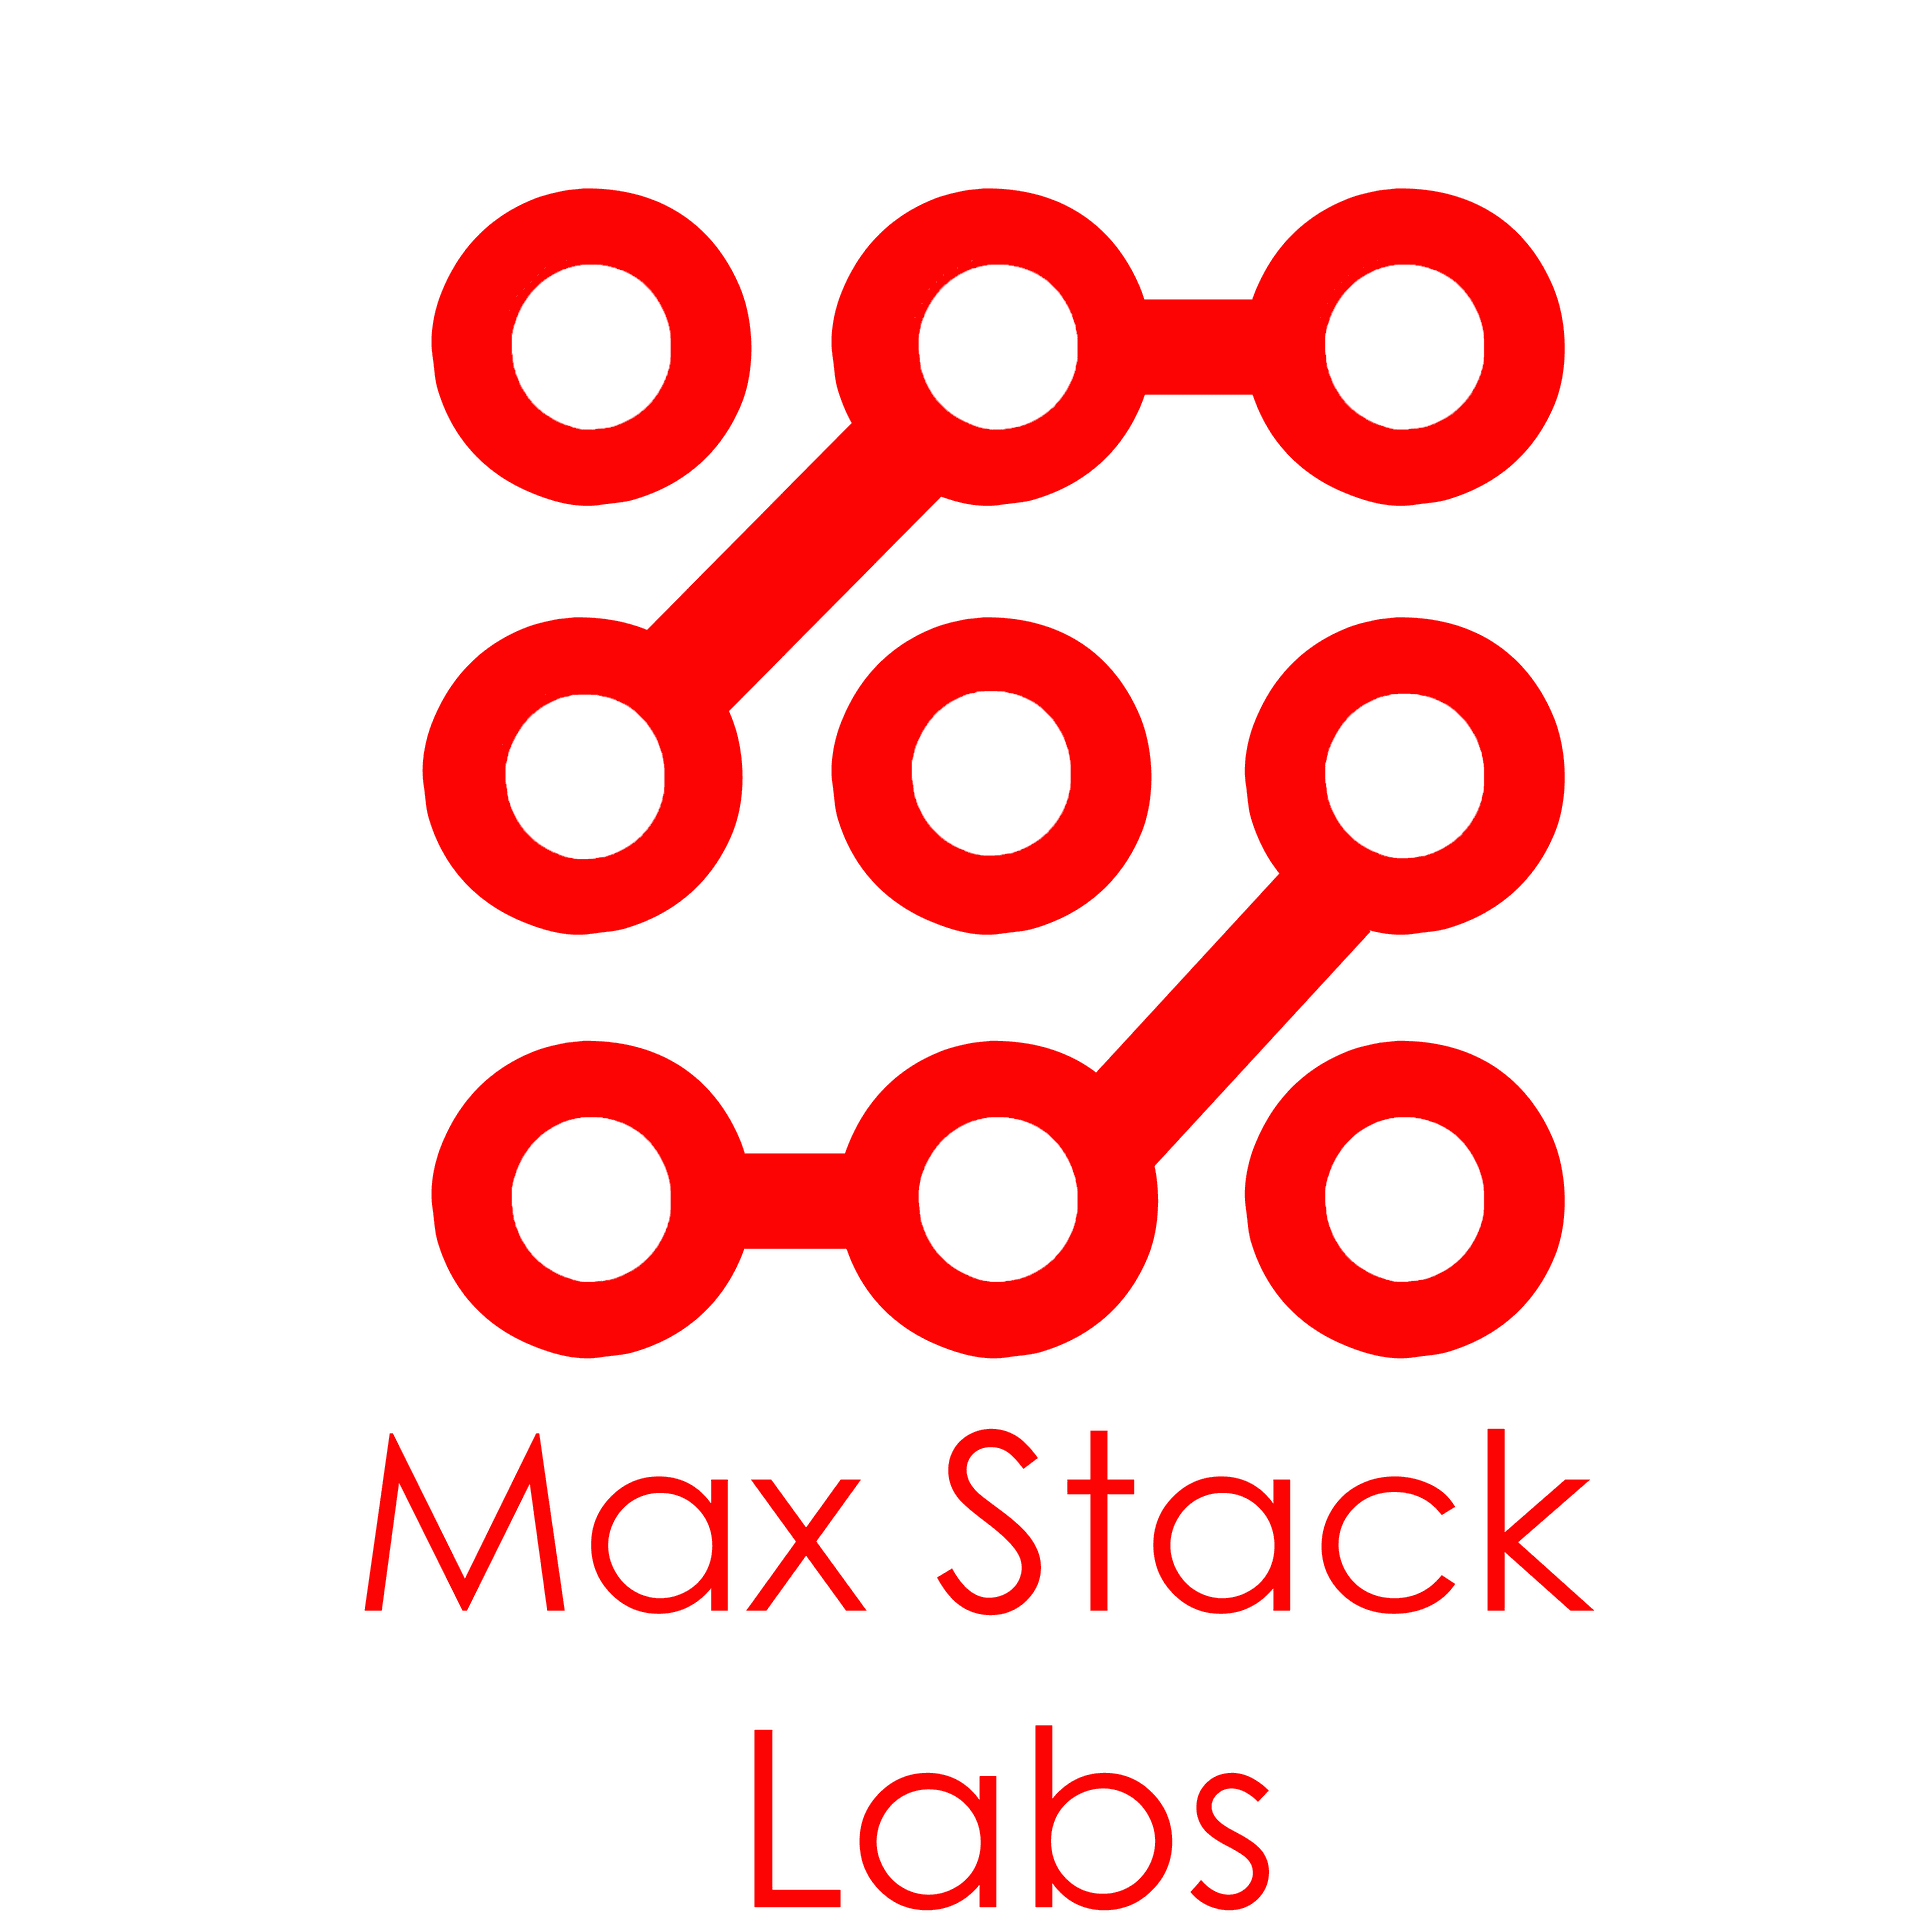 Max Stack Labs